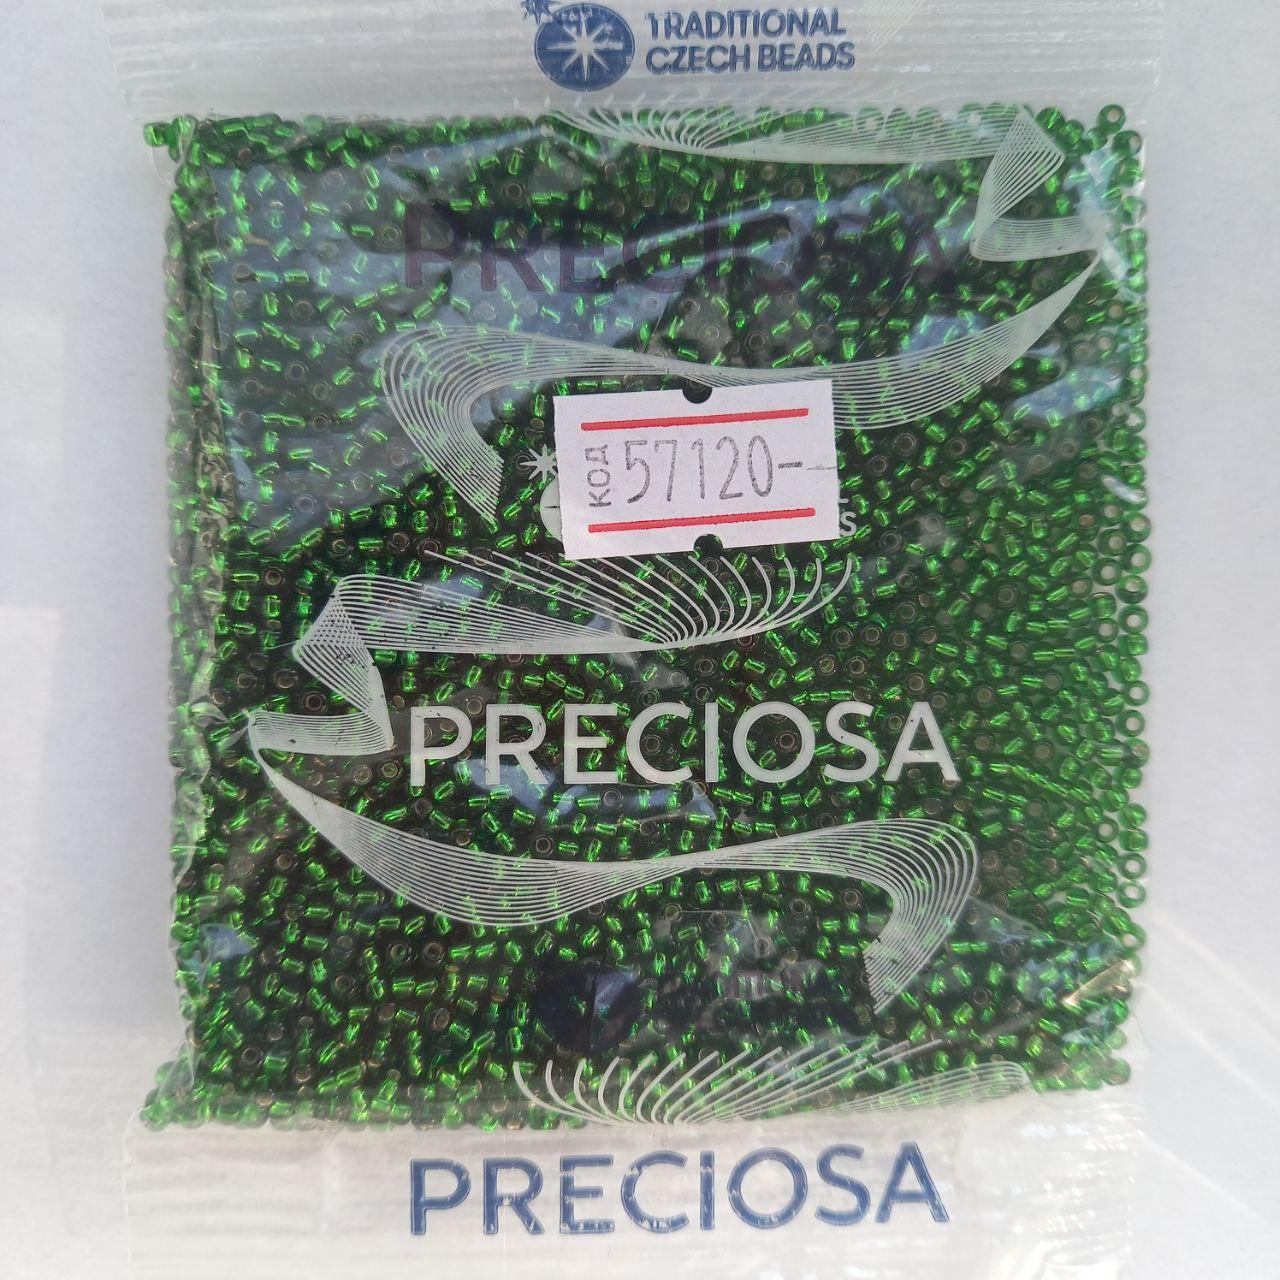 Бісер чеський Preciosa блискучий зелений 50г 10/0 57120